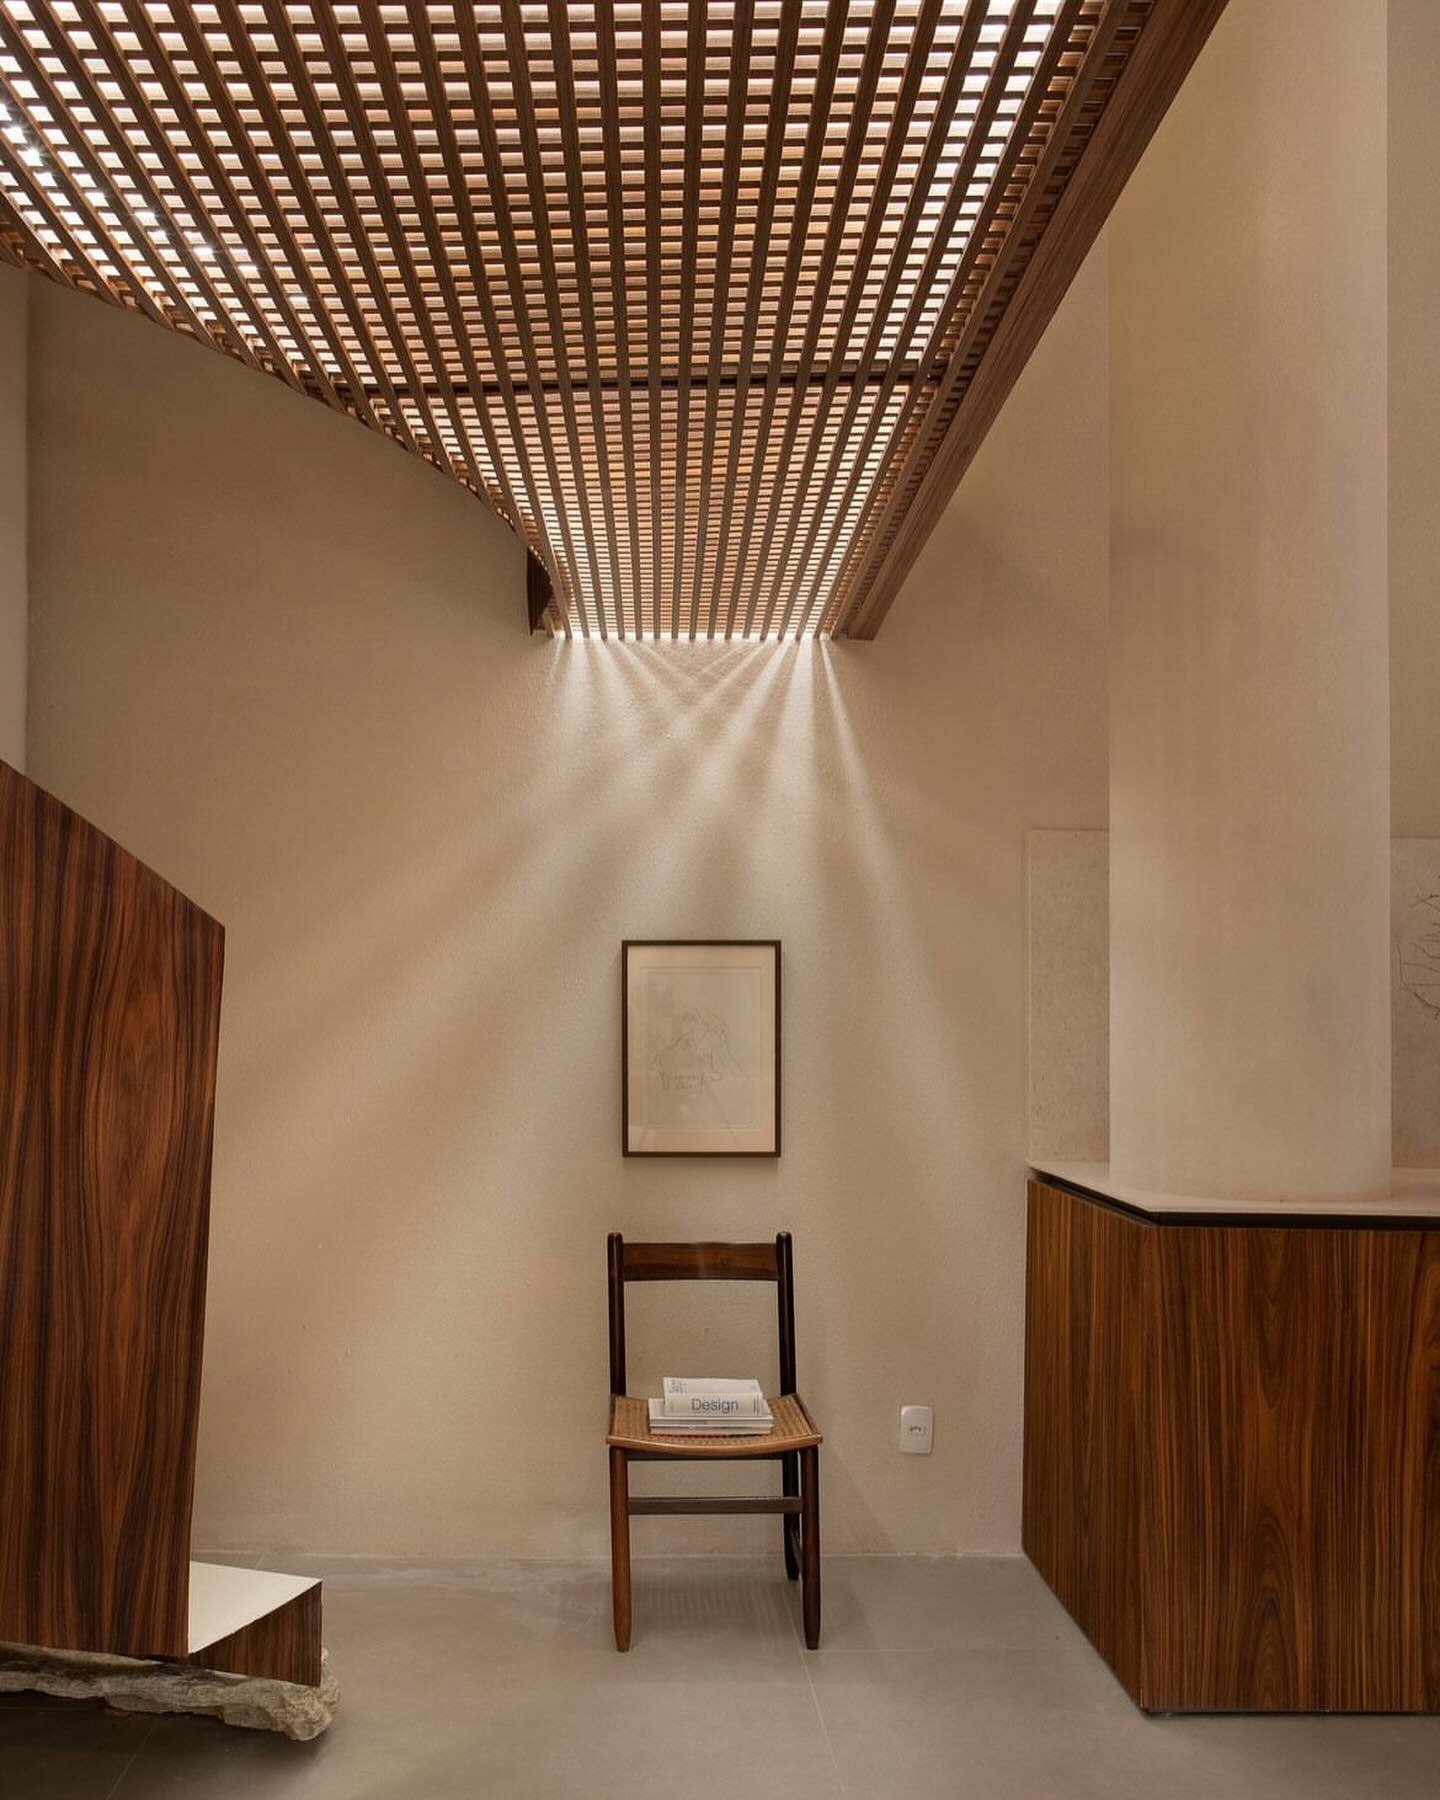 Swipe for unreal stairs 😍

Design by Ticiane Lima Architecture

Photography by @denilsonmachadomca 

#japandidesign #wabisabiinteriors #interiordesign #neutraldesign